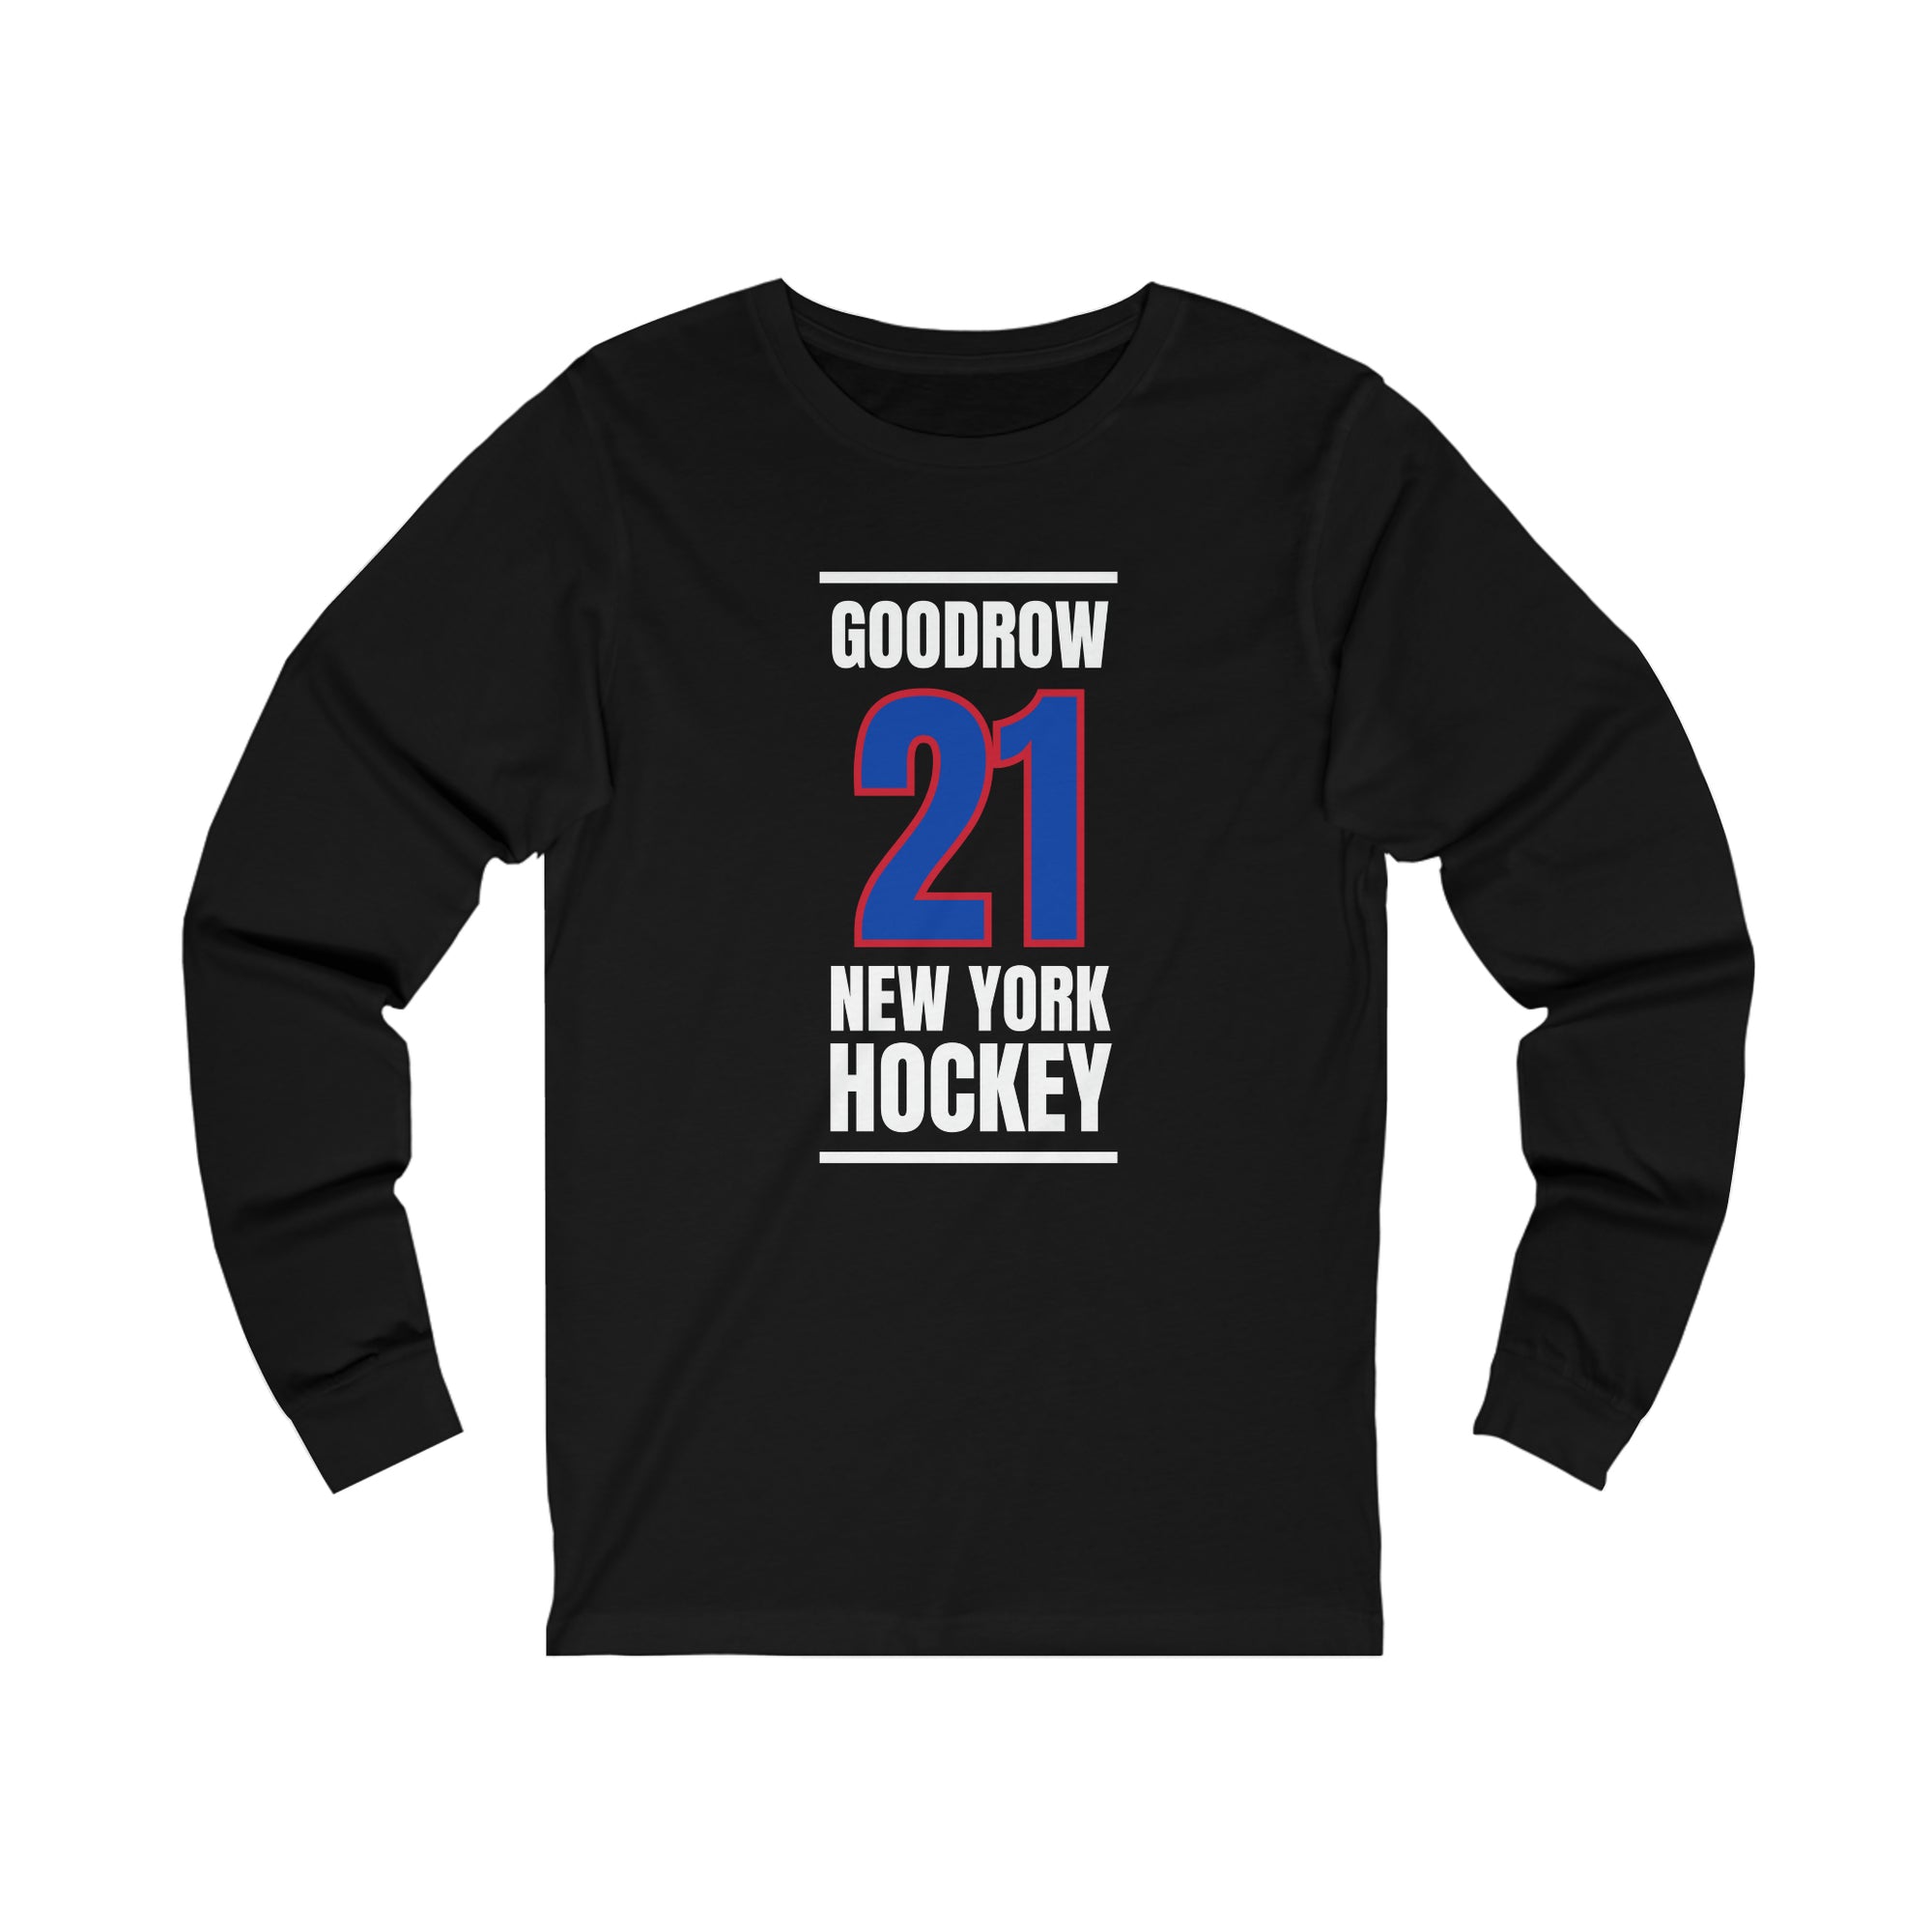 Goodrow 21 New York Hockey Royal Blue Vertical Design Unisex Jersey Long Sleeve Shirt